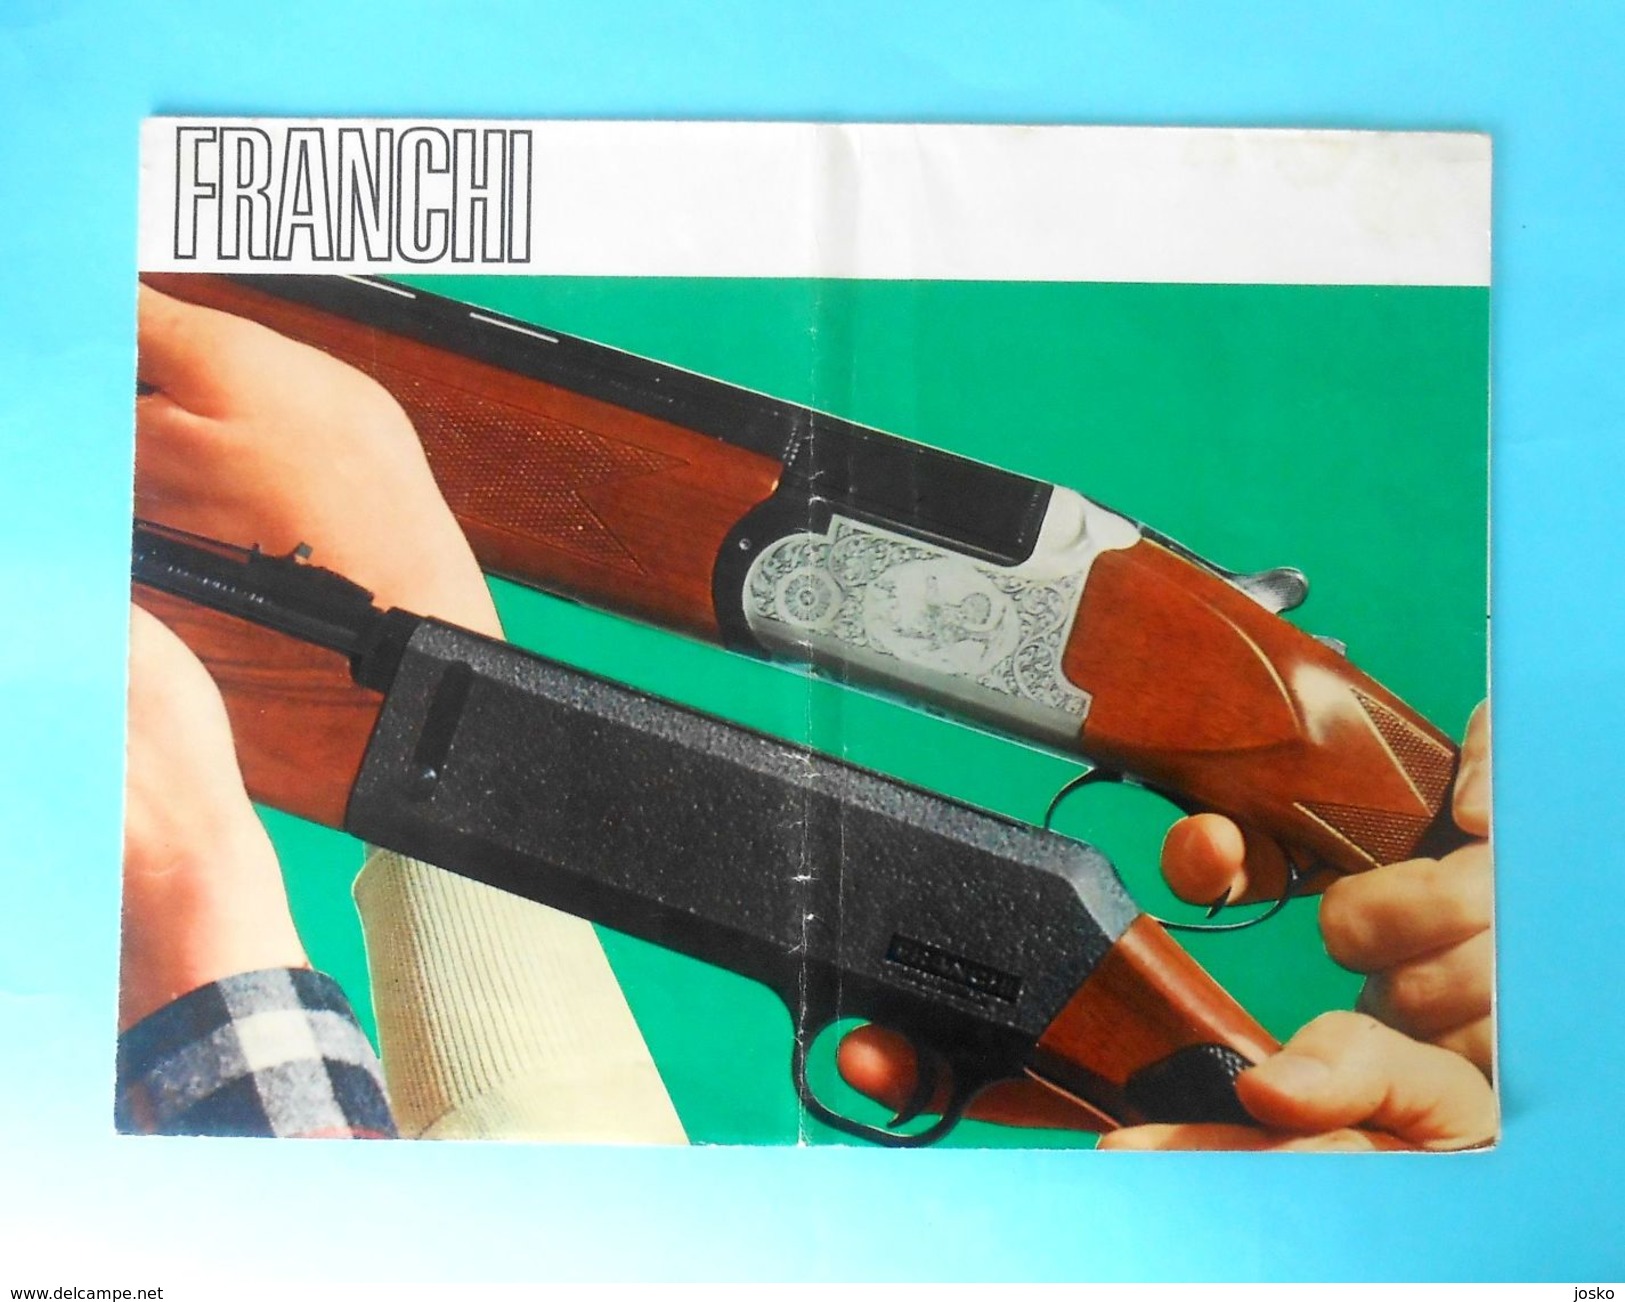 FRANCHI ( Italy ) - Falconet shotgun & carabine ... Yugoslav vintage catalogue * chasse jagd caccia caza hunt Italia